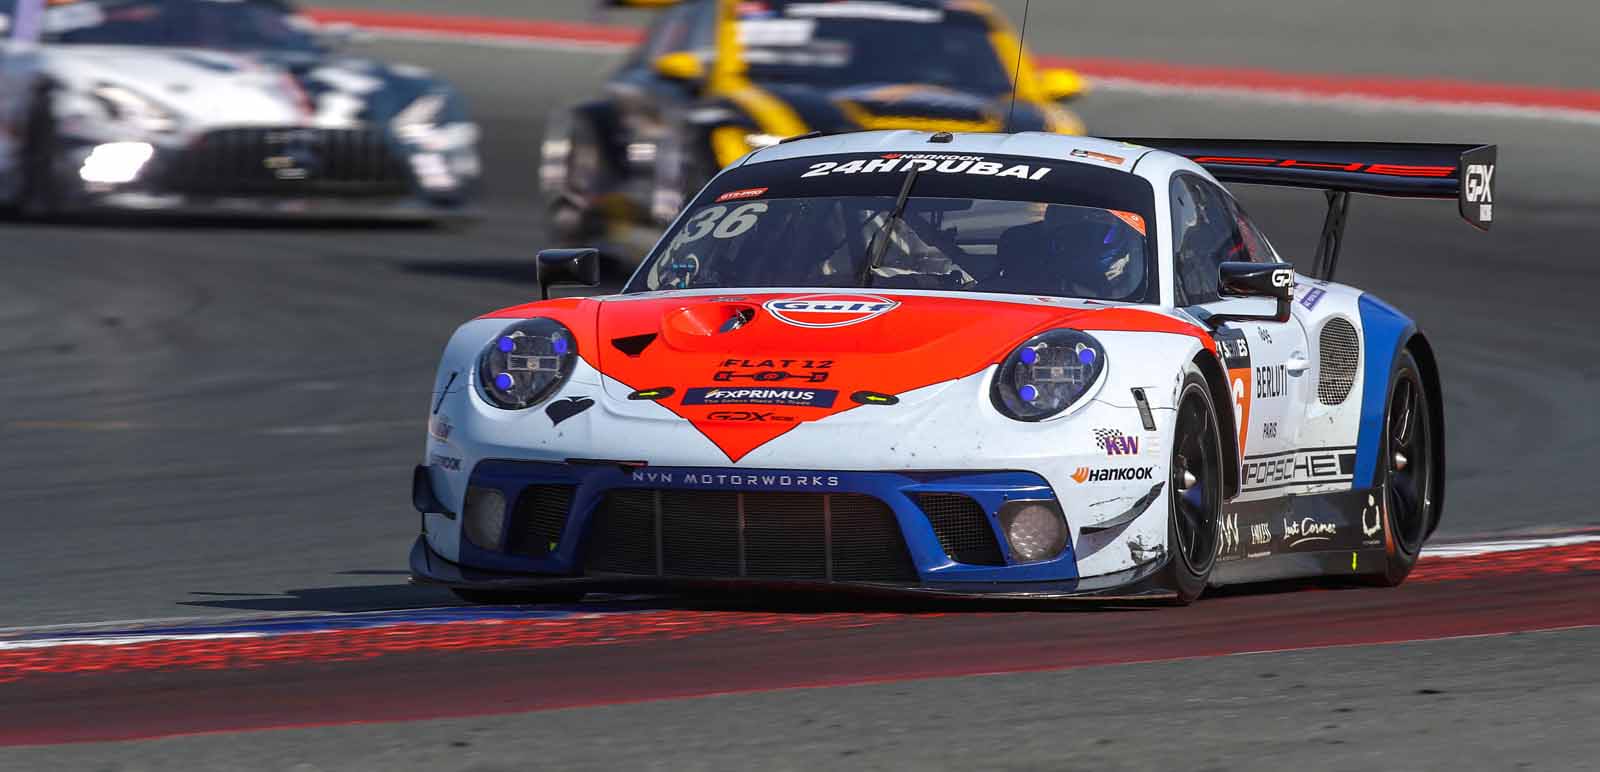 24 ore di Dubai - Gara<br />Porsche e GPX senza rivali